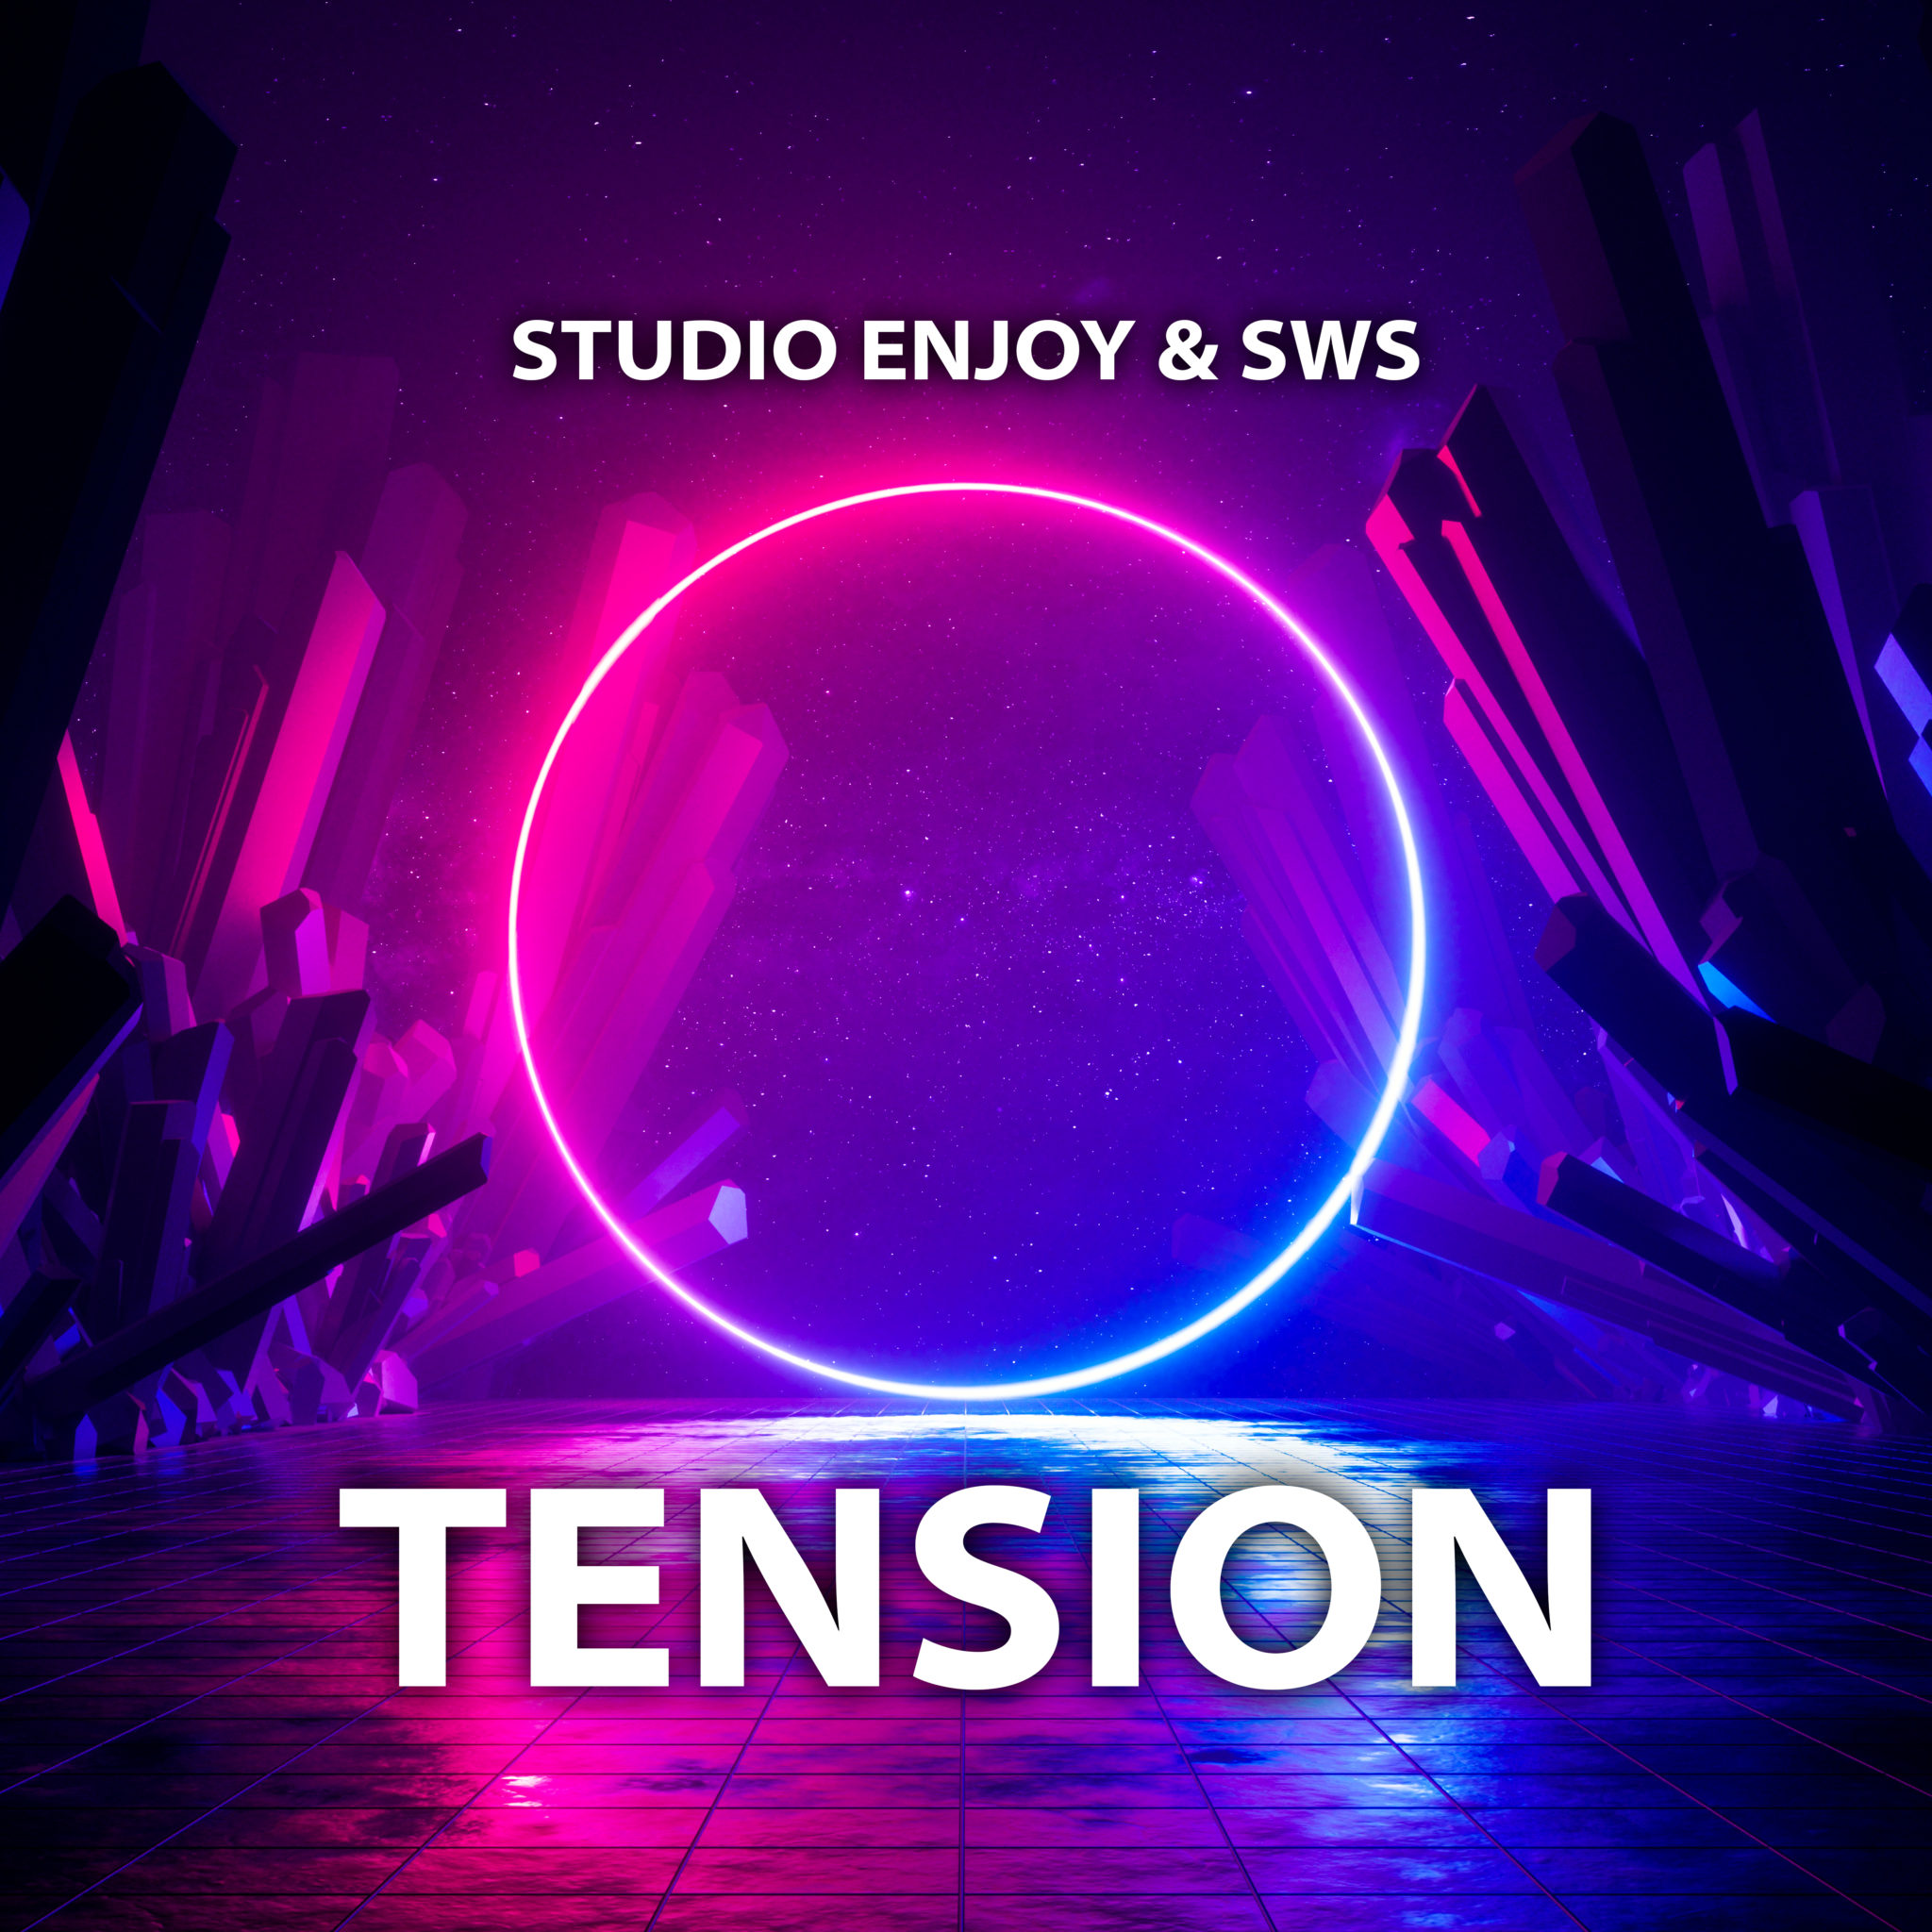 tension-studio-enjoy